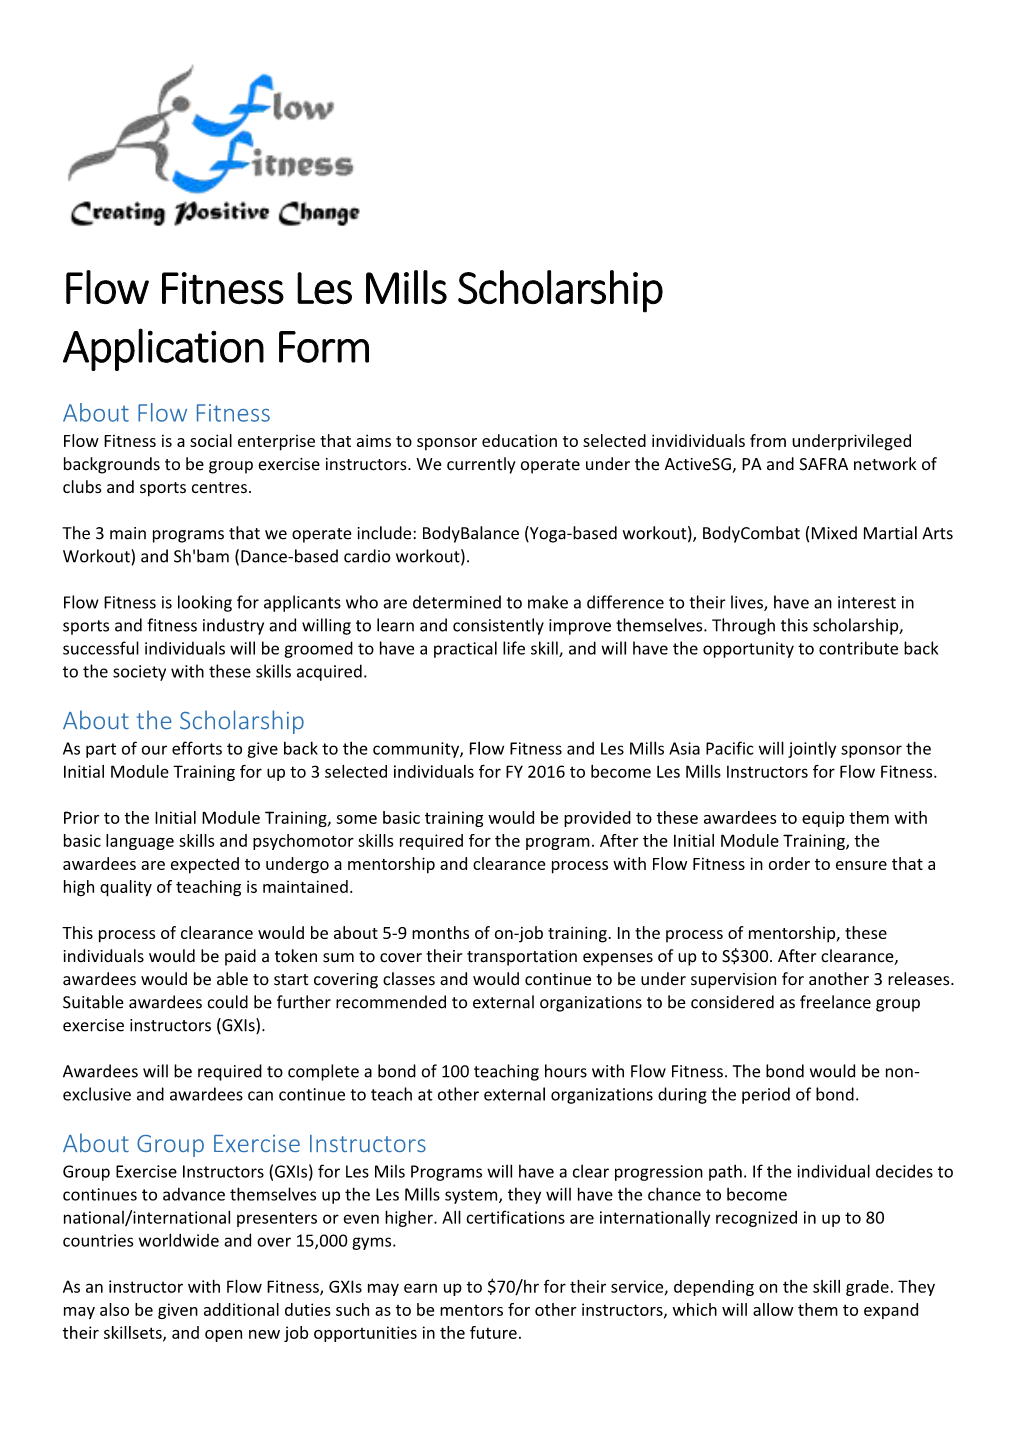 Flow Fitness Les Mills Scholarship Application Form